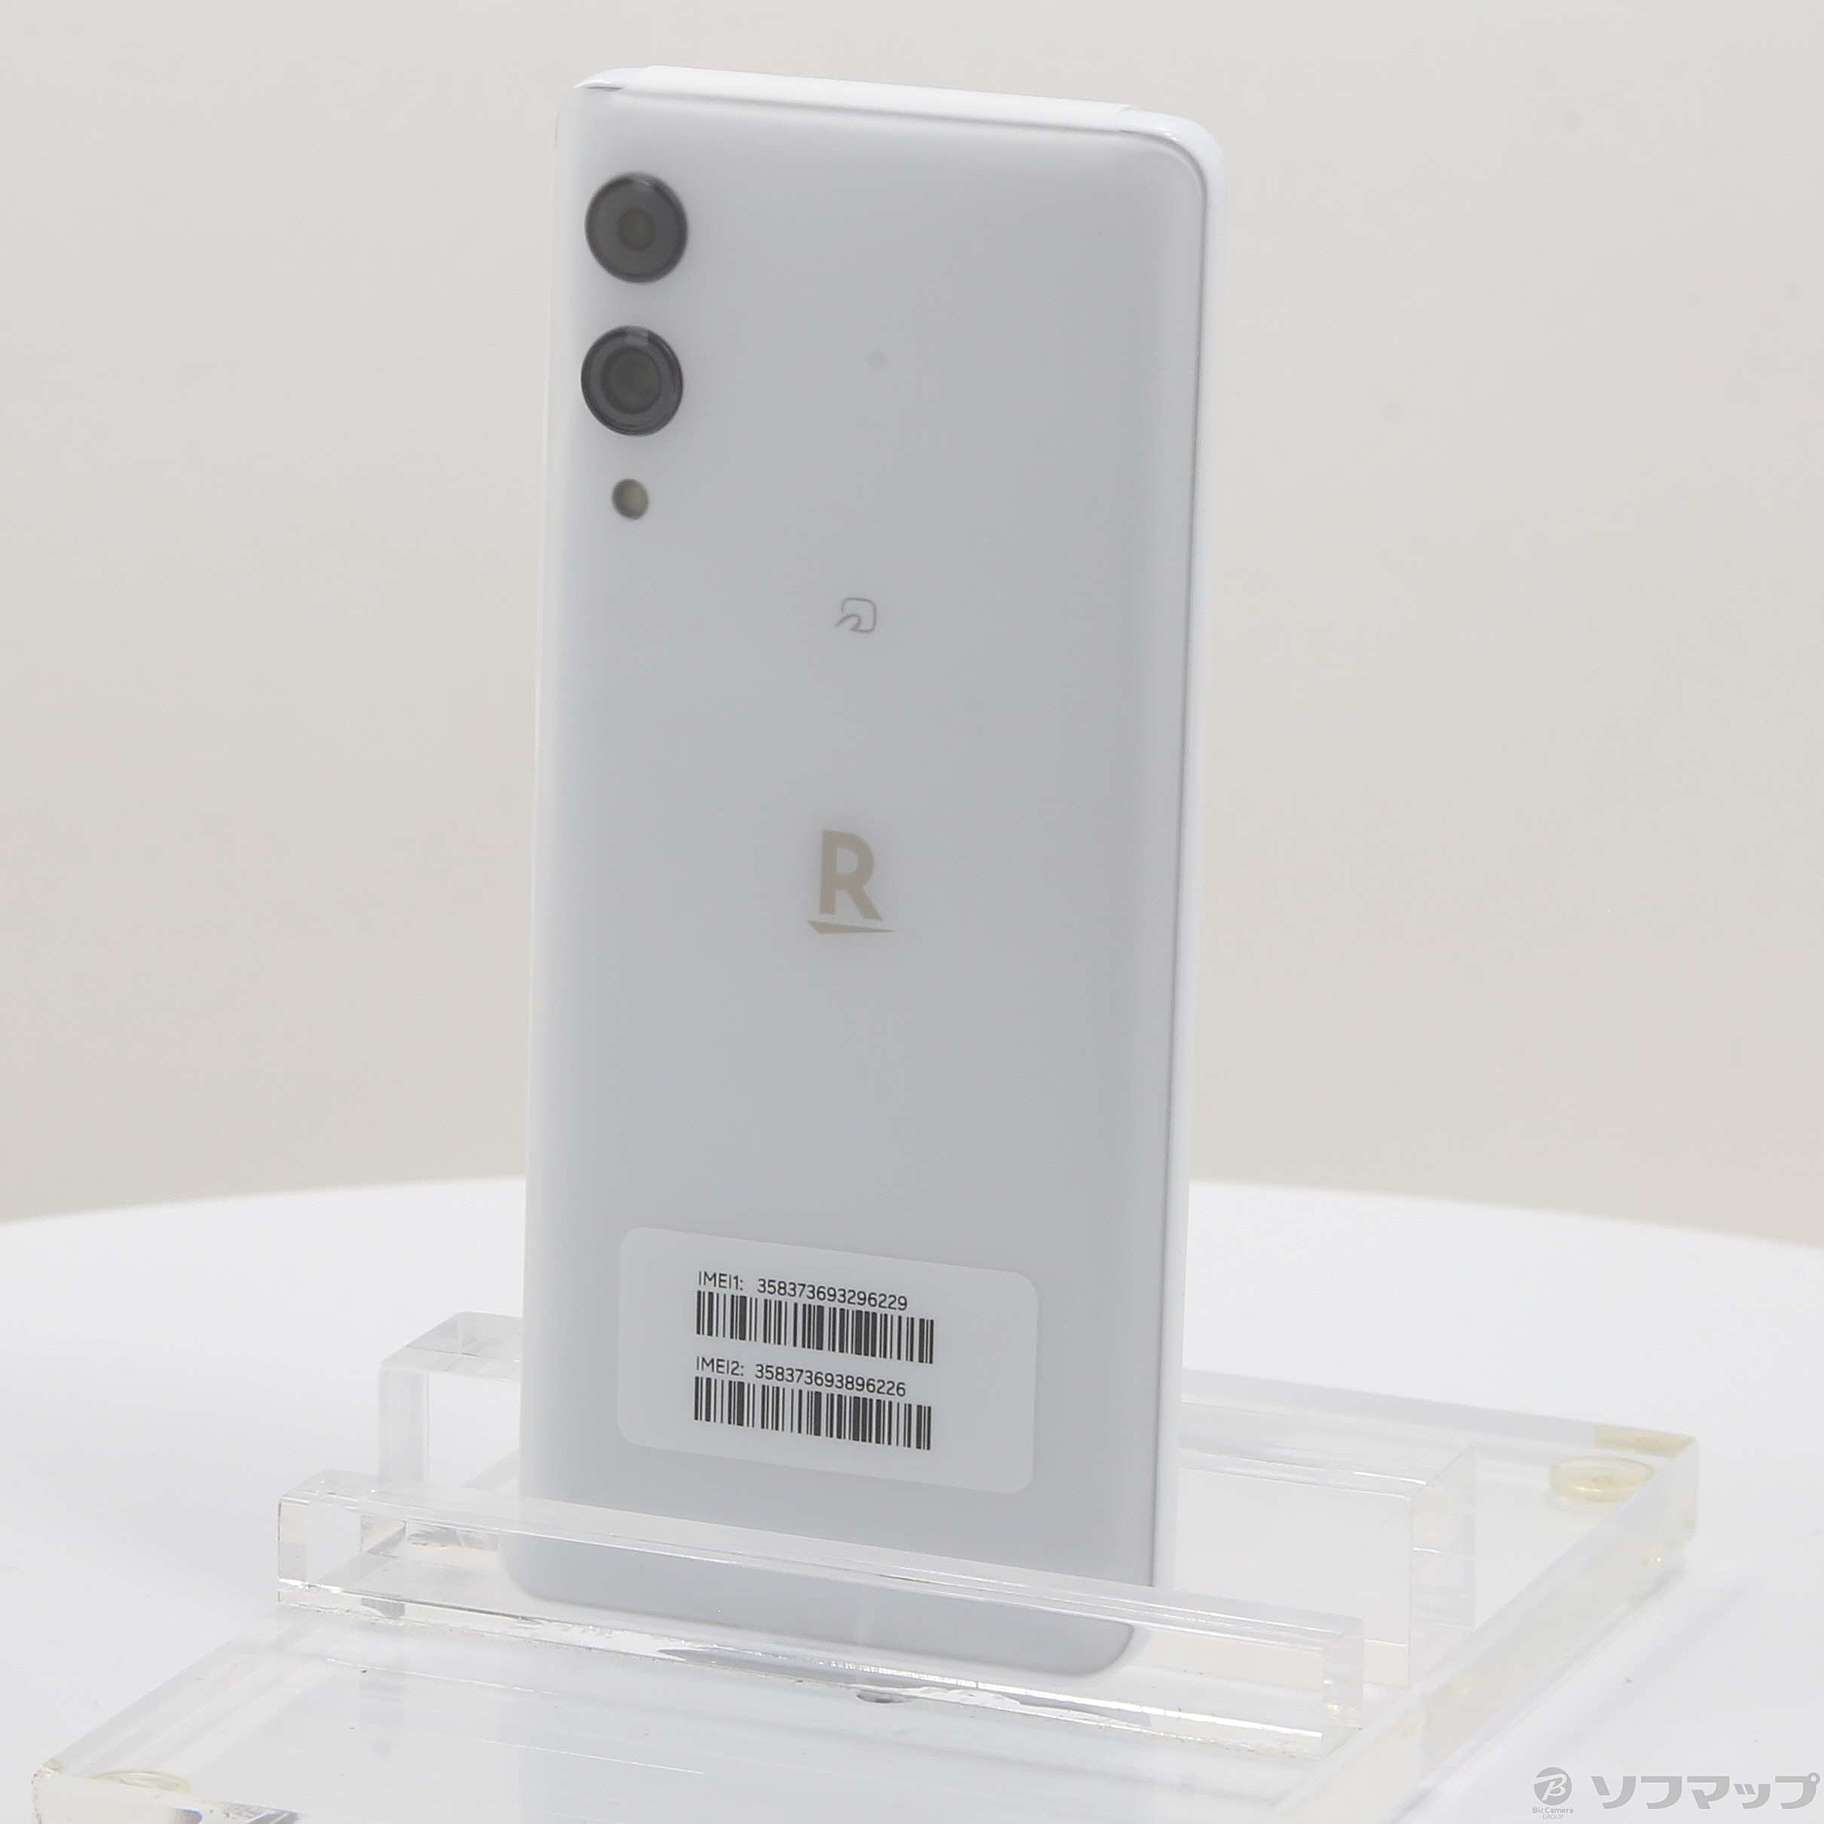 Rakuten Hand 5G ホワイト 新品未開封 - スマートフォン本体